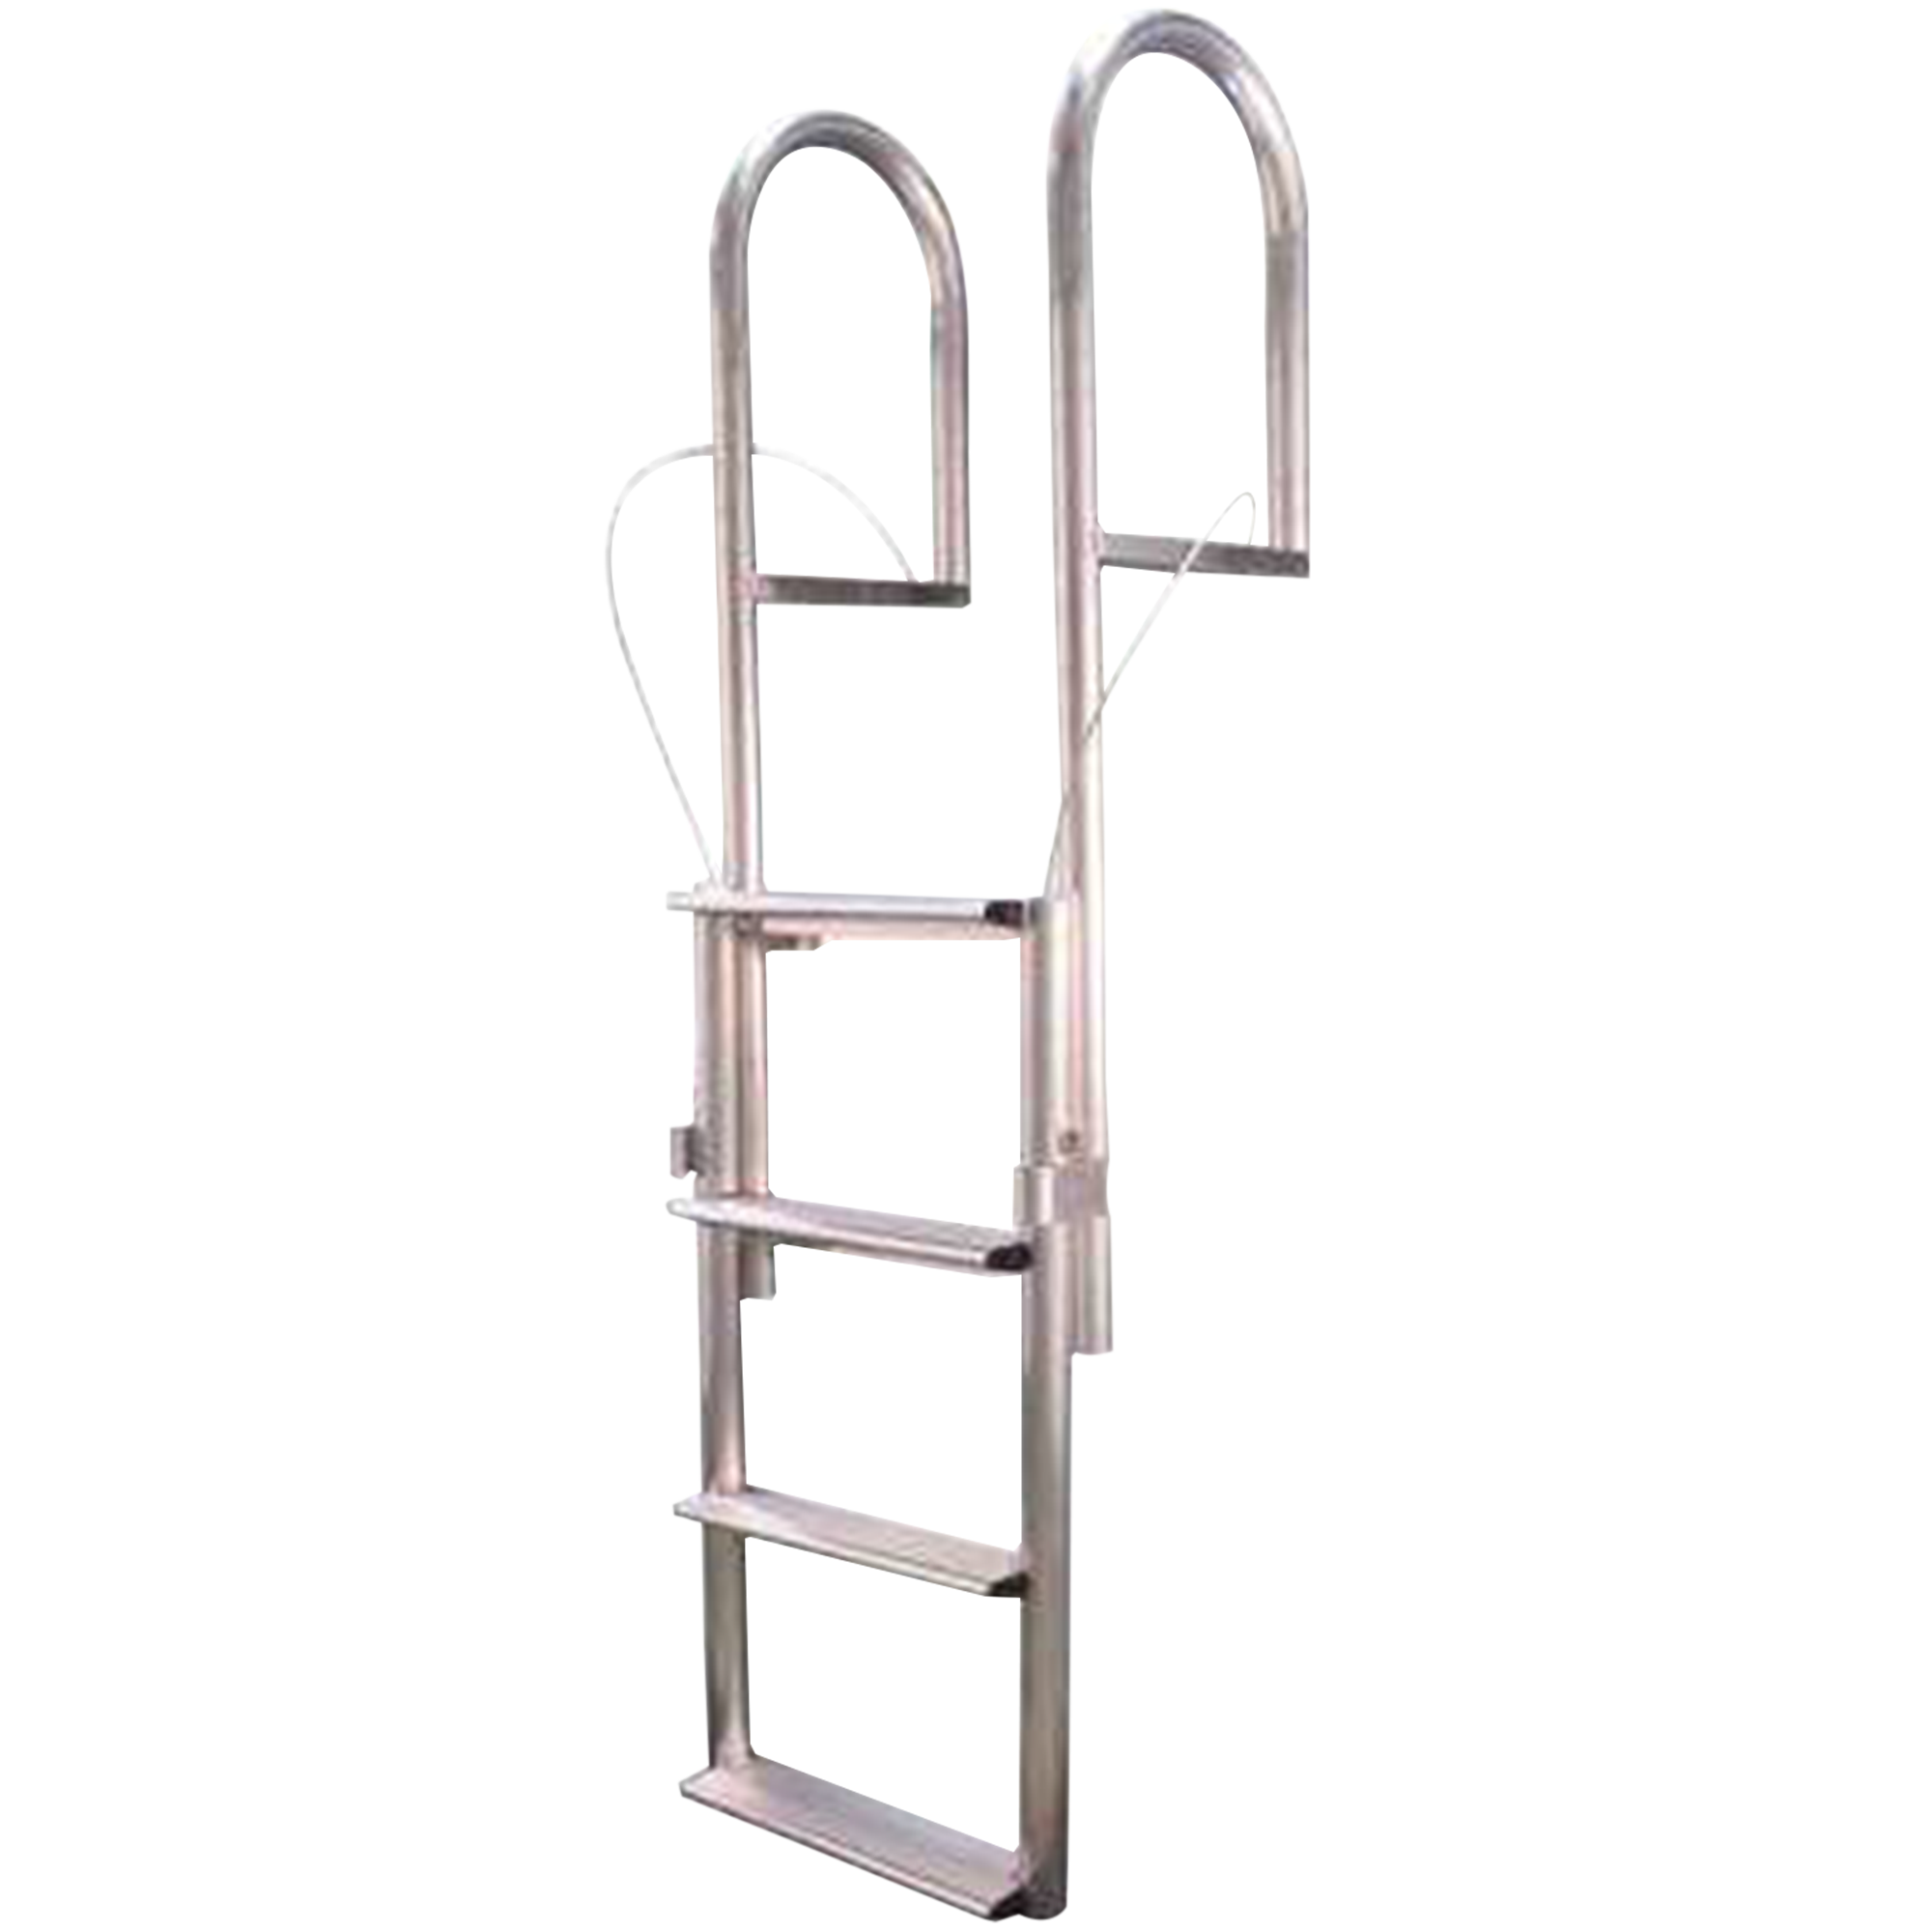 4 Rung Aluminum Lifting Ladder - 4" Wide Step